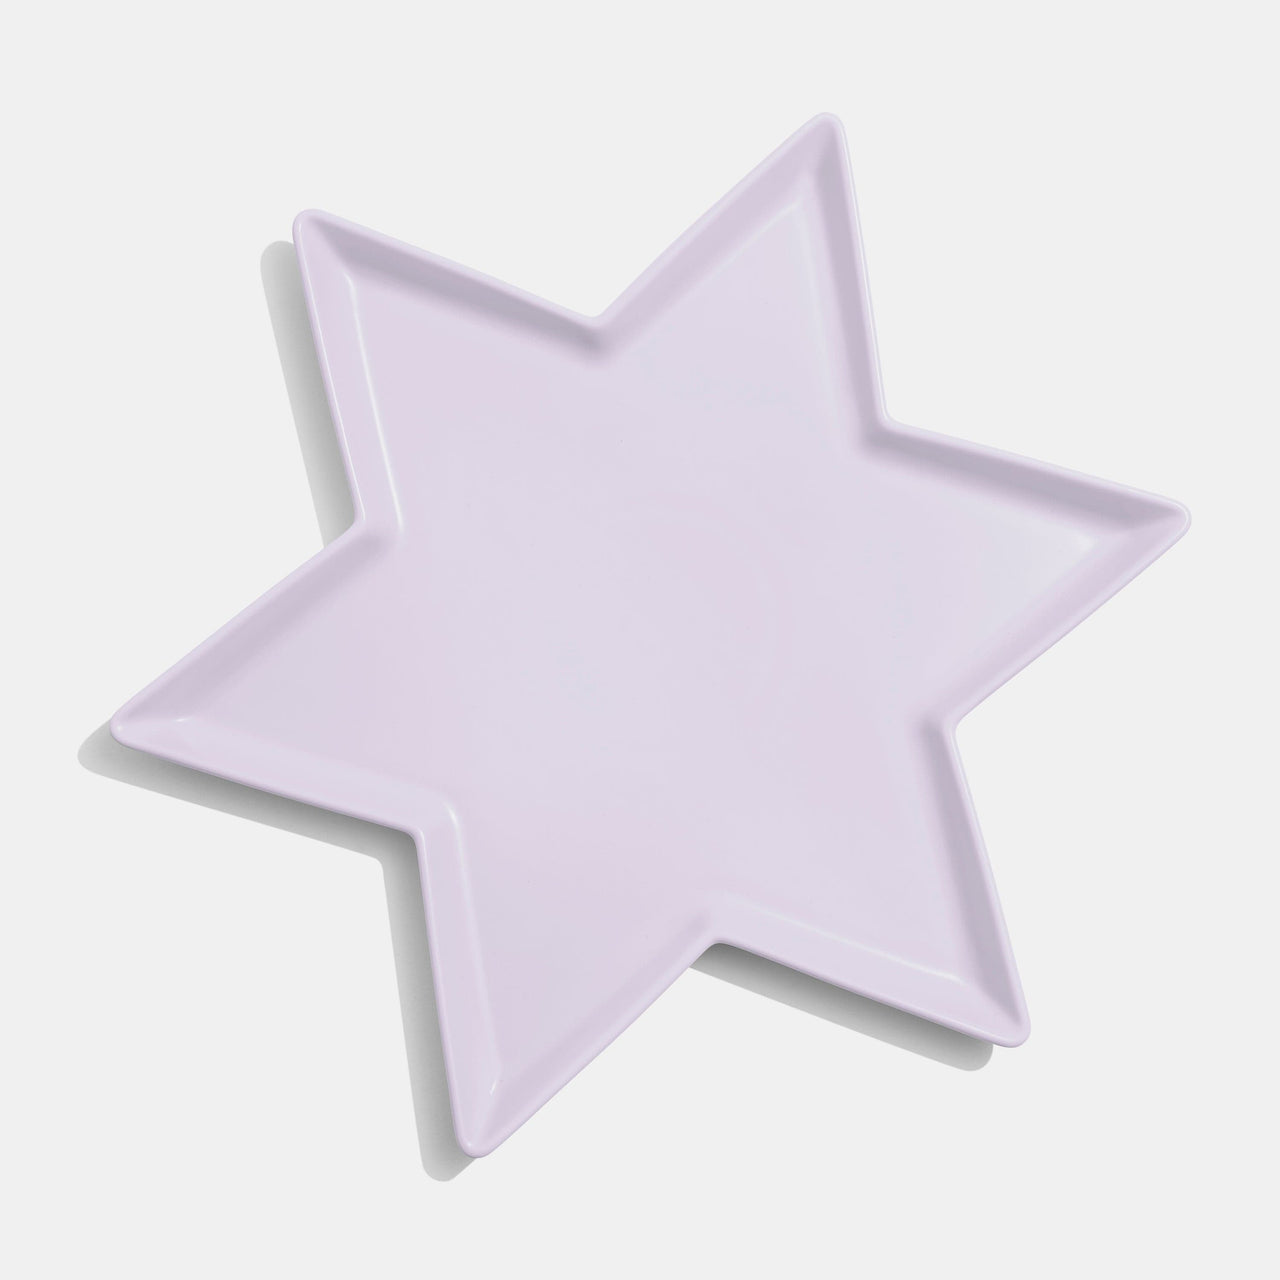 Spode Serving Pieces Star Platter - Lilac